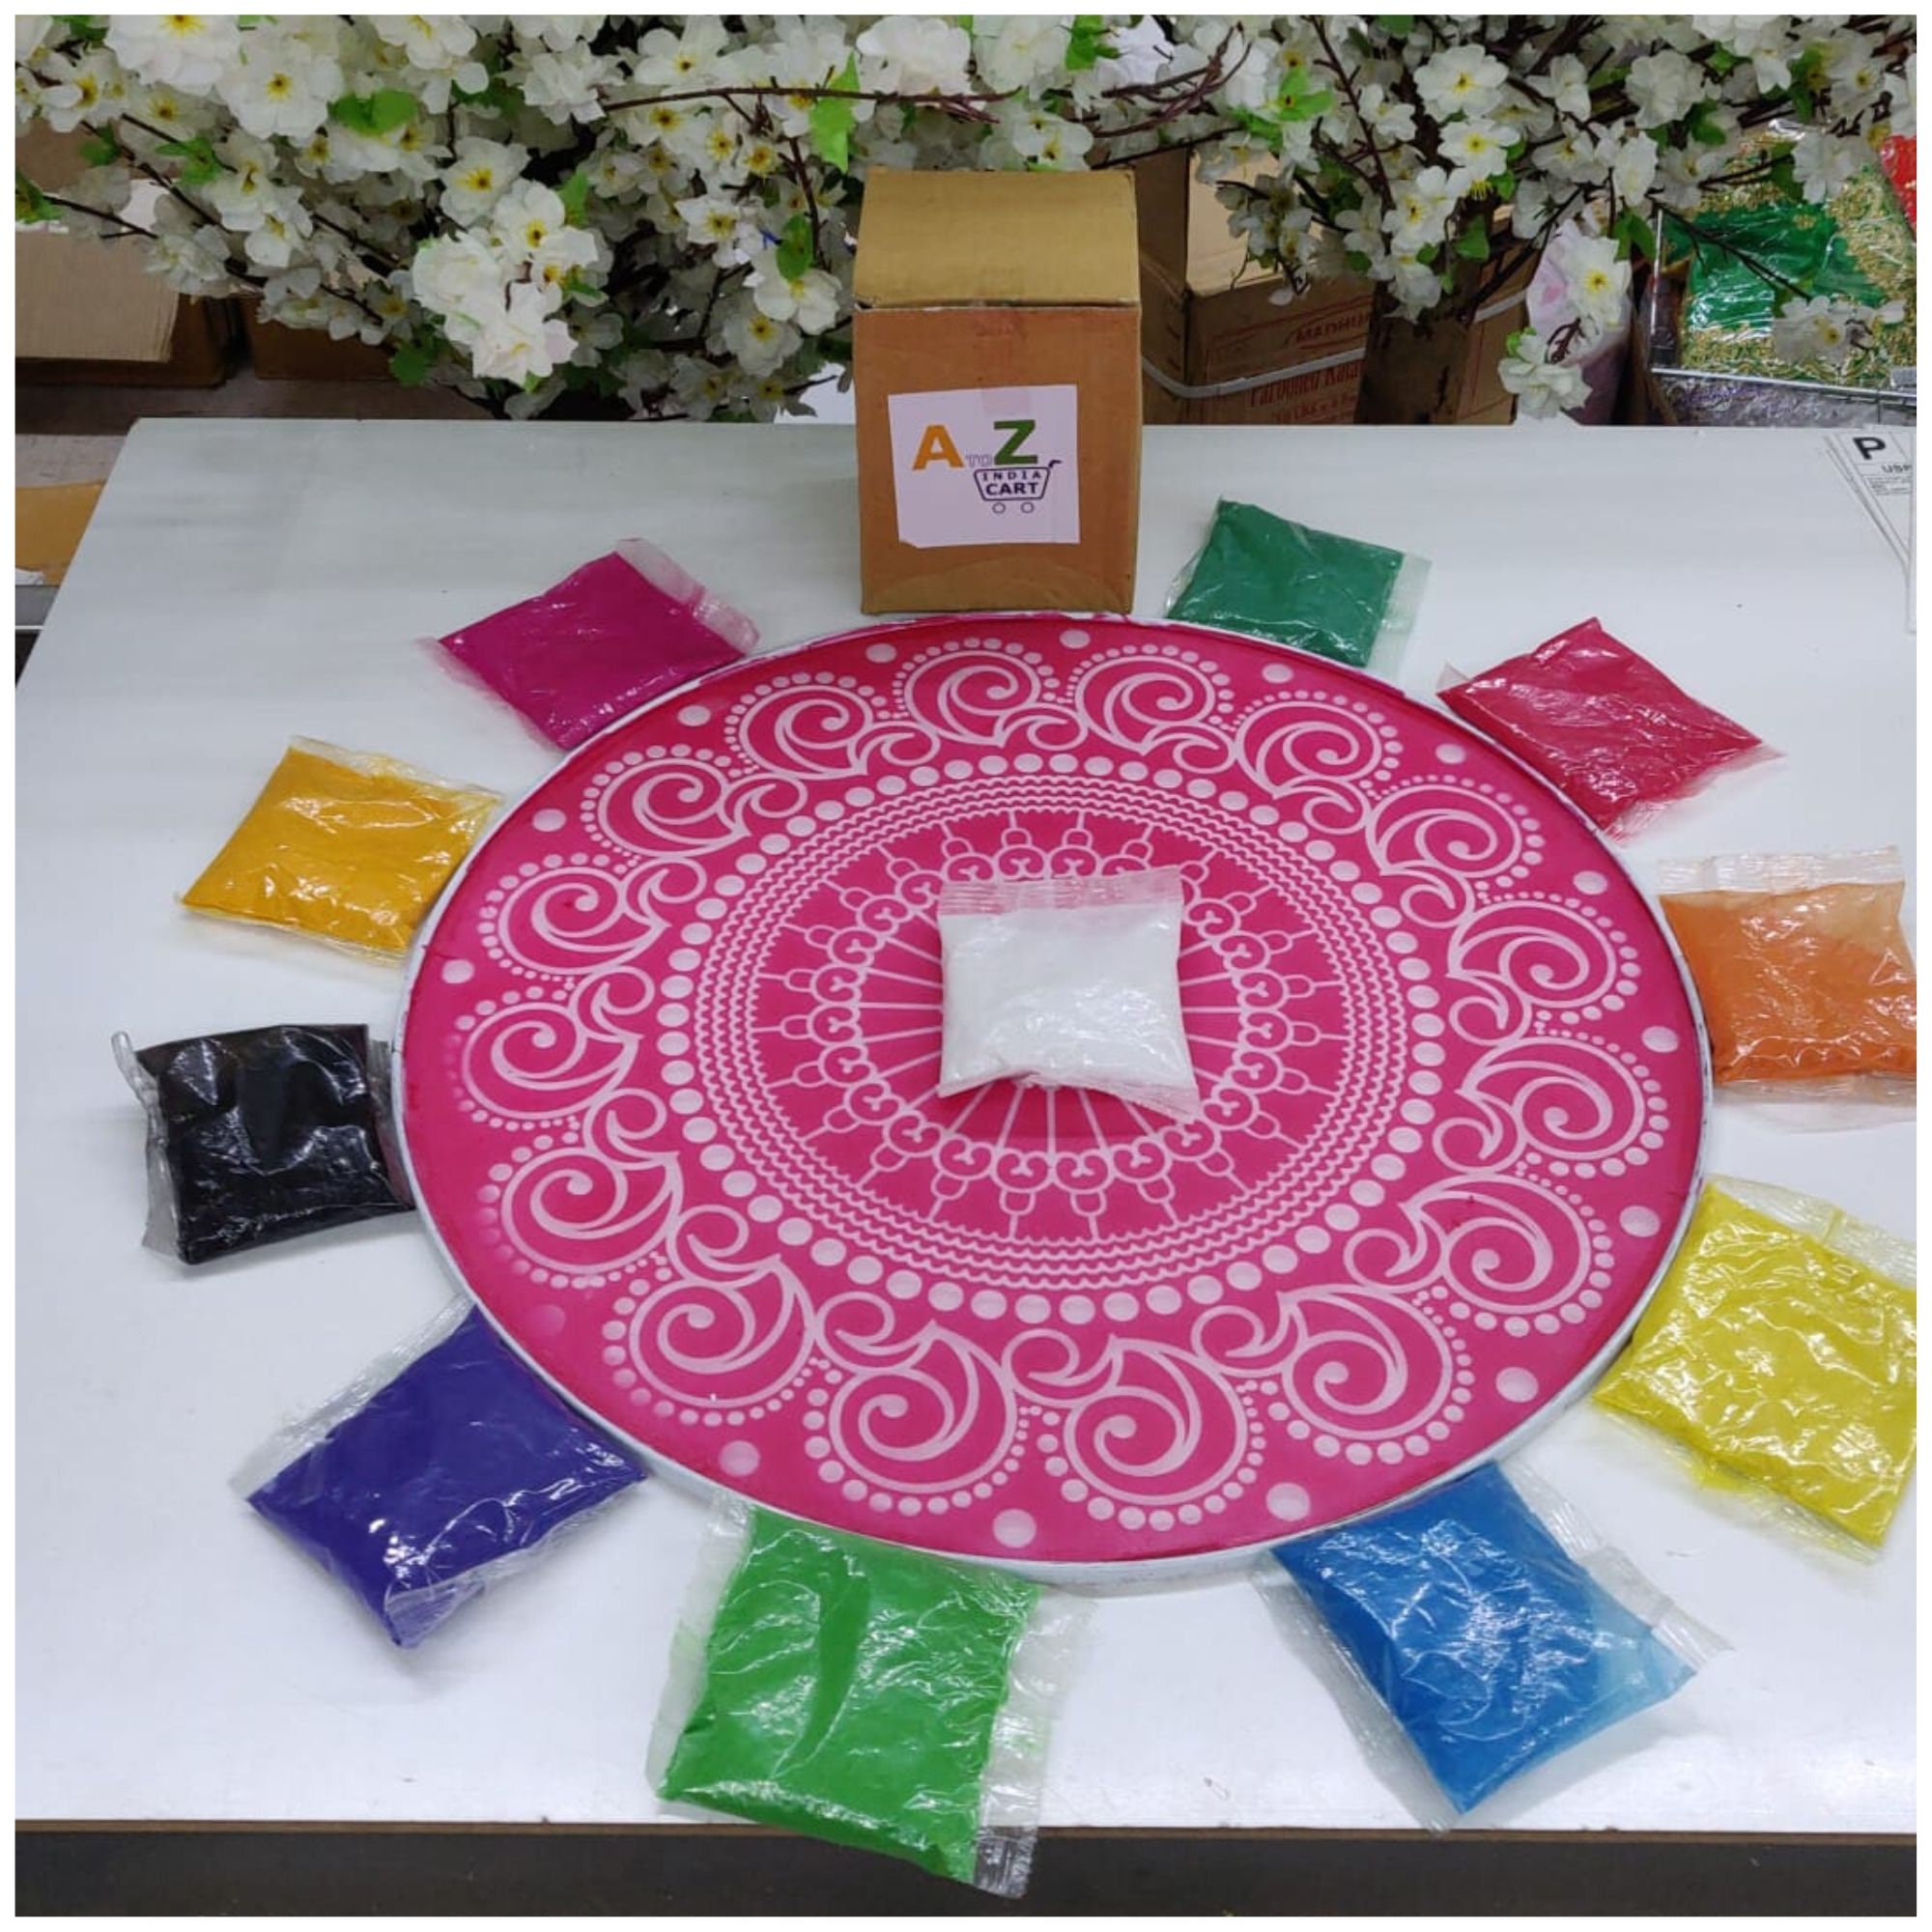 Shanti Mineral - Rangoli Colour Powder, Rangoli Colour